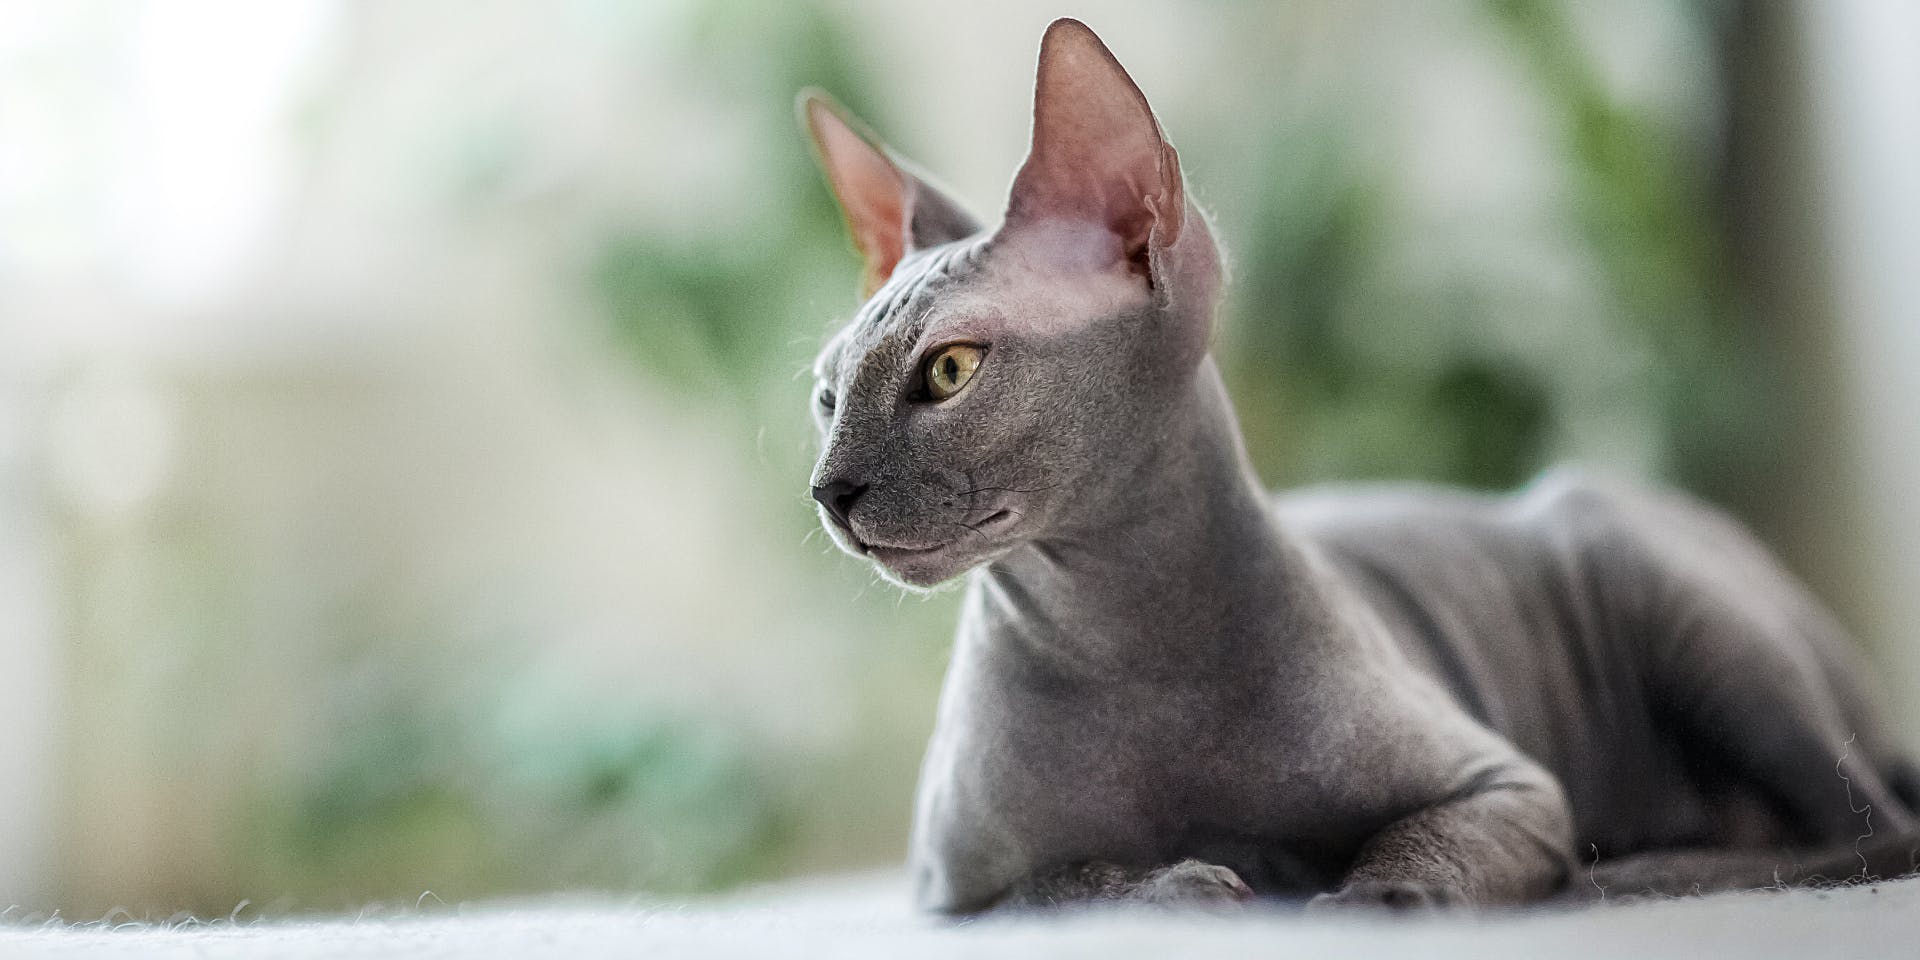 A gray Sphynx cat